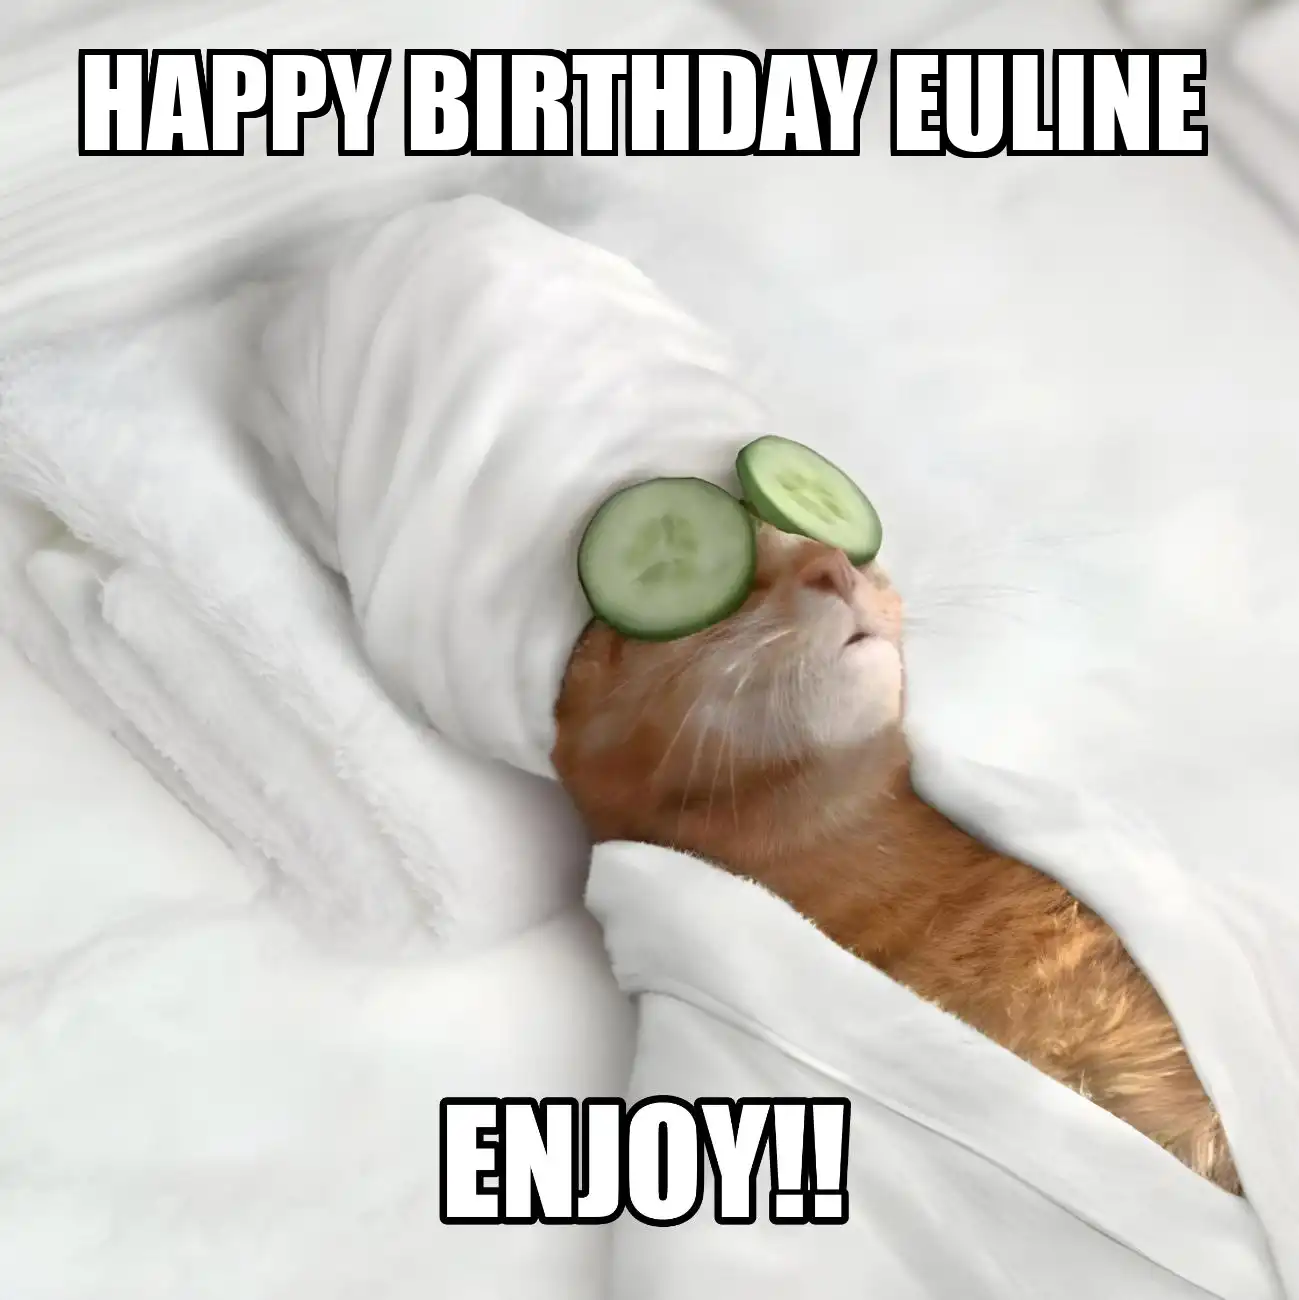 Happy Birthday Euline Enjoy Cat Meme